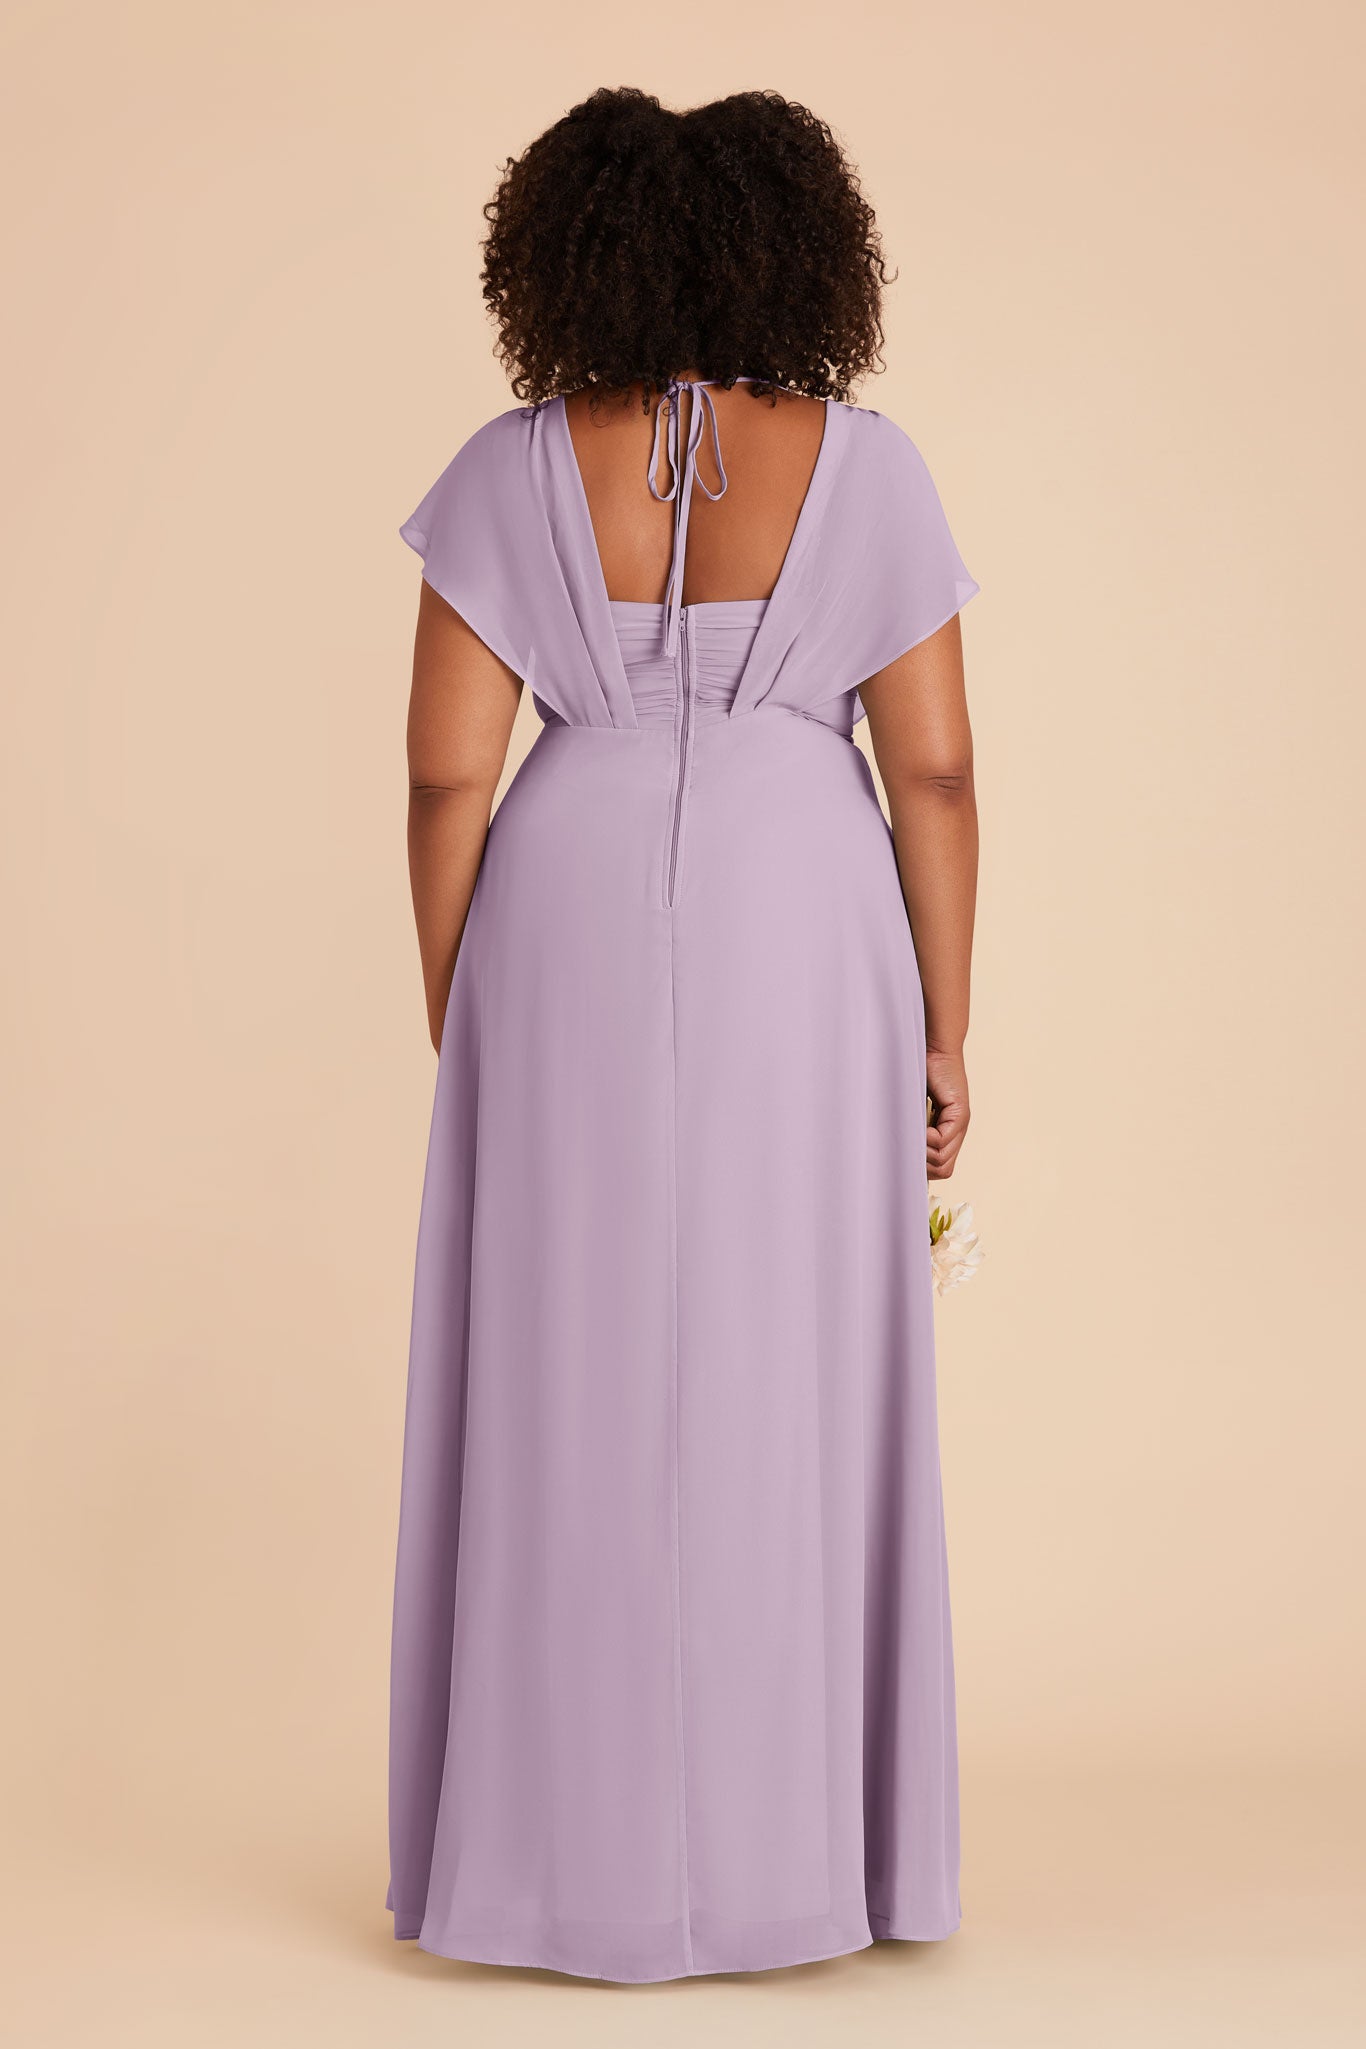 Violet Chiffon Dress - Lavender